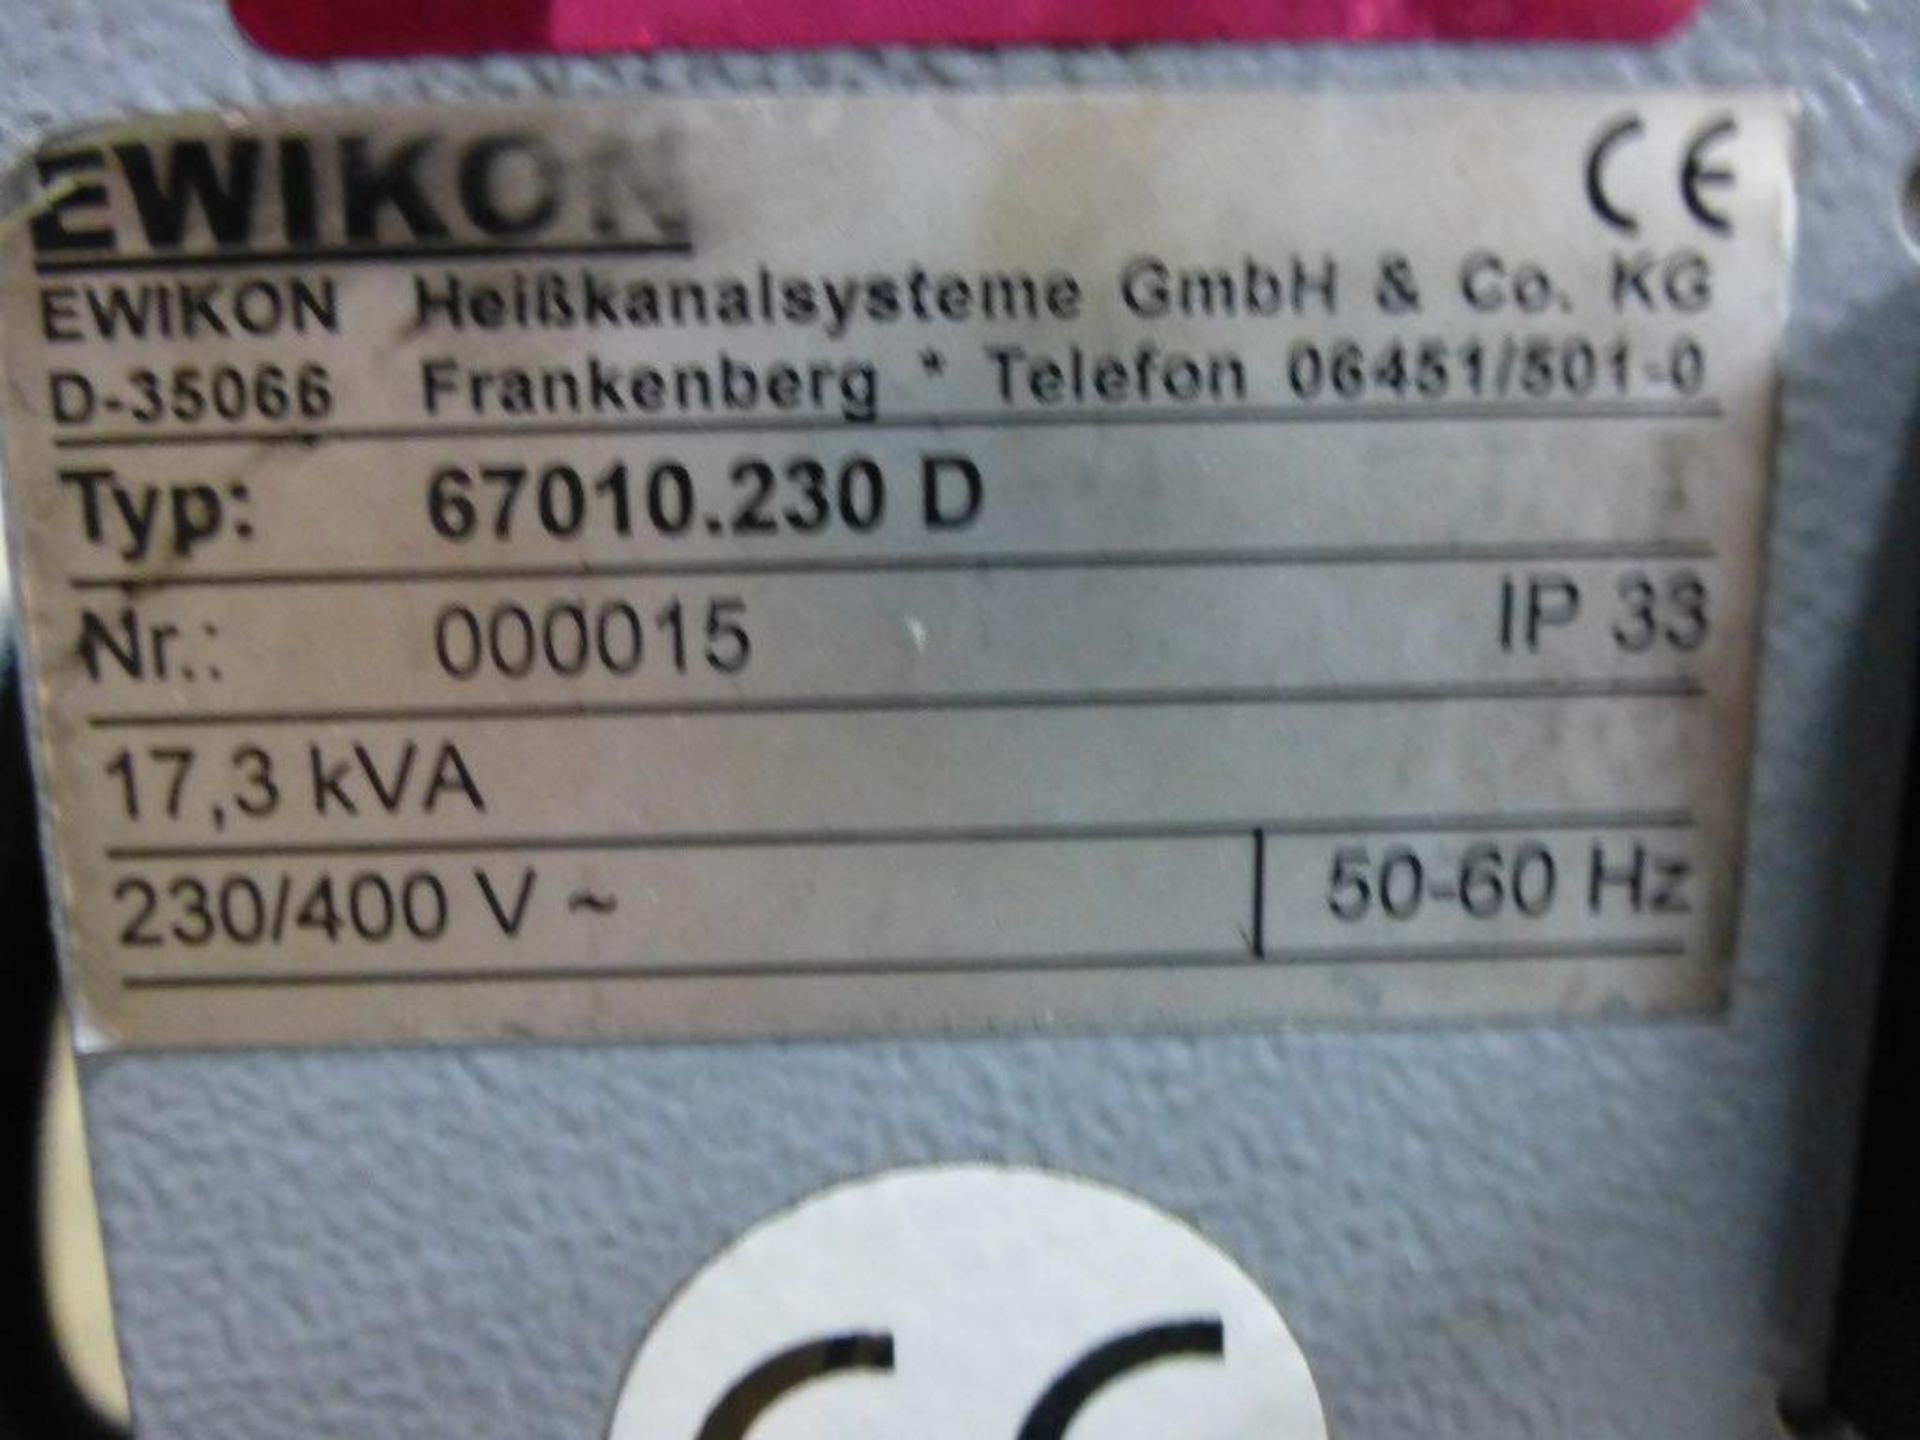 Ewikon 67010.320D temperature controller, Serial No 000015 - Bild 3 aus 3